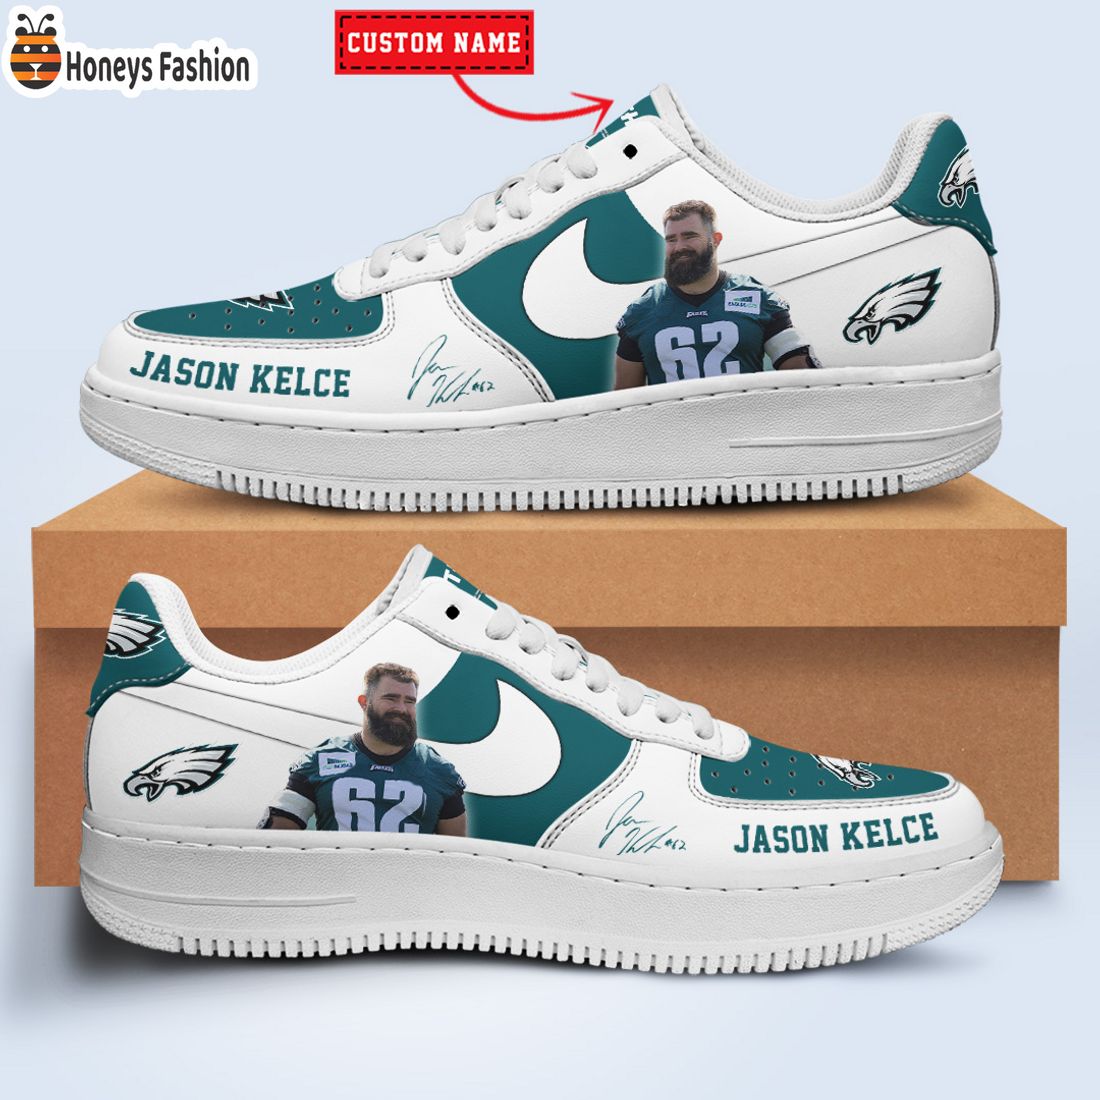 TOP SELLER Jason Kelce Philadelphia Eagles NFL Custom Name Nike Air Force Shoes